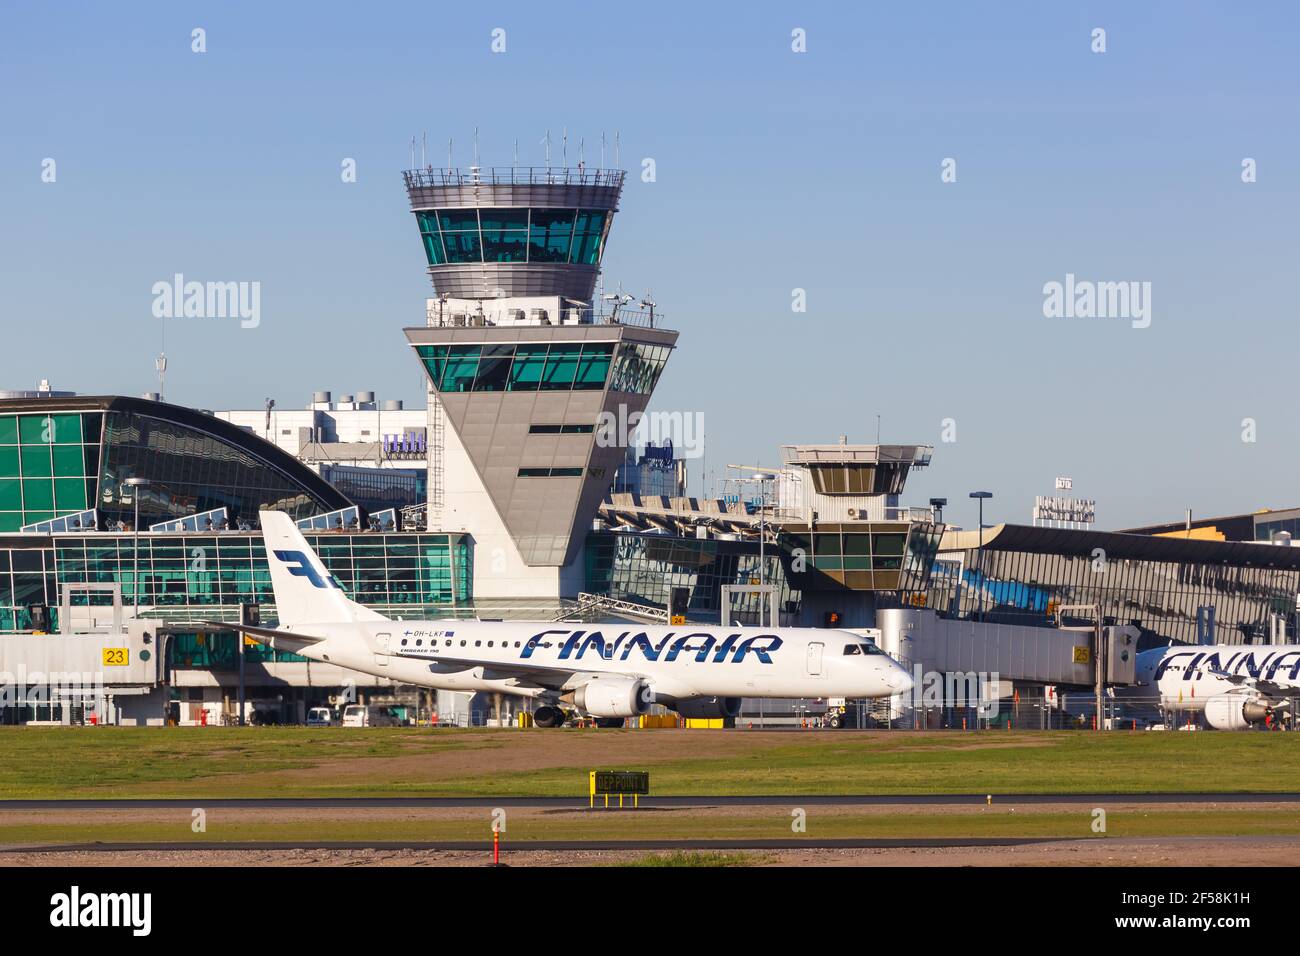 Helsinki, Finland - May 25, 2018: Finnair Embraer 190 airplane at Helsinki airport. Stock Photo